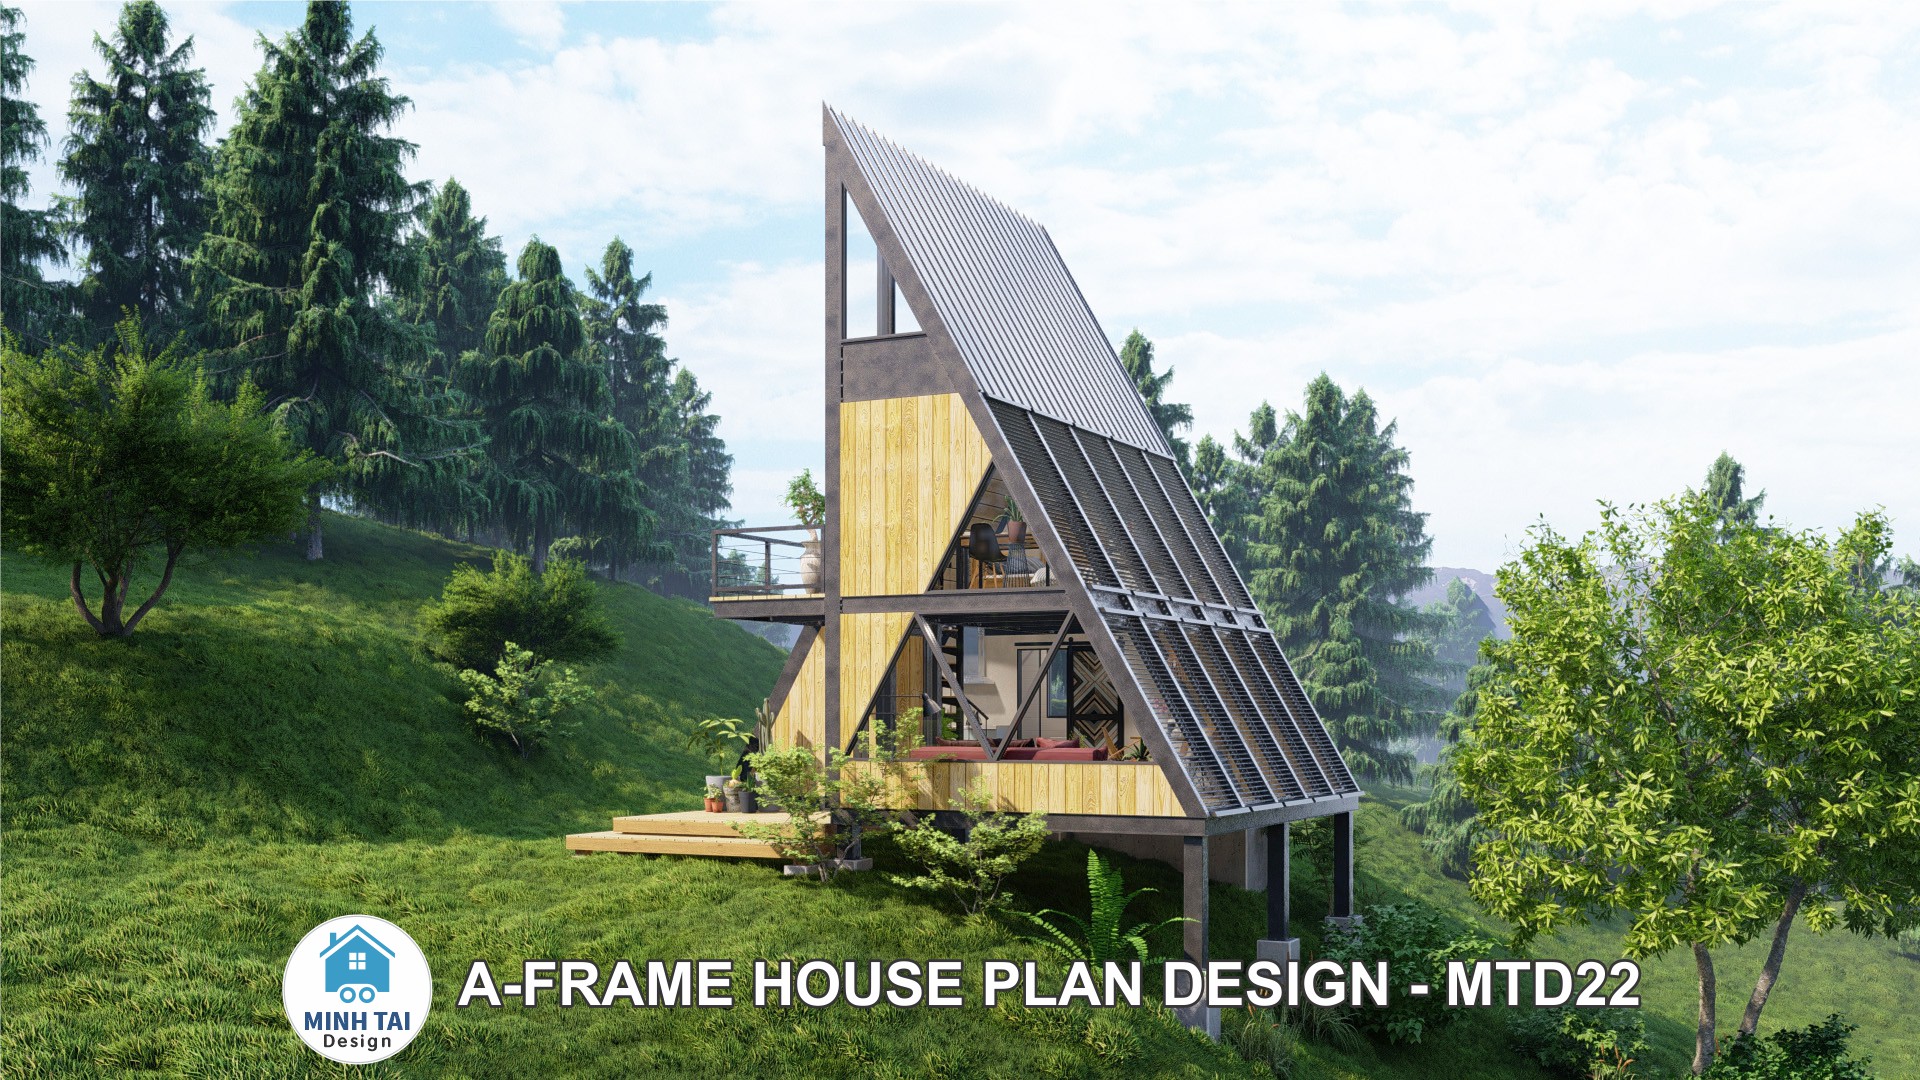 A Frame House Plan Design - Mtd22 - Minh Tai Design